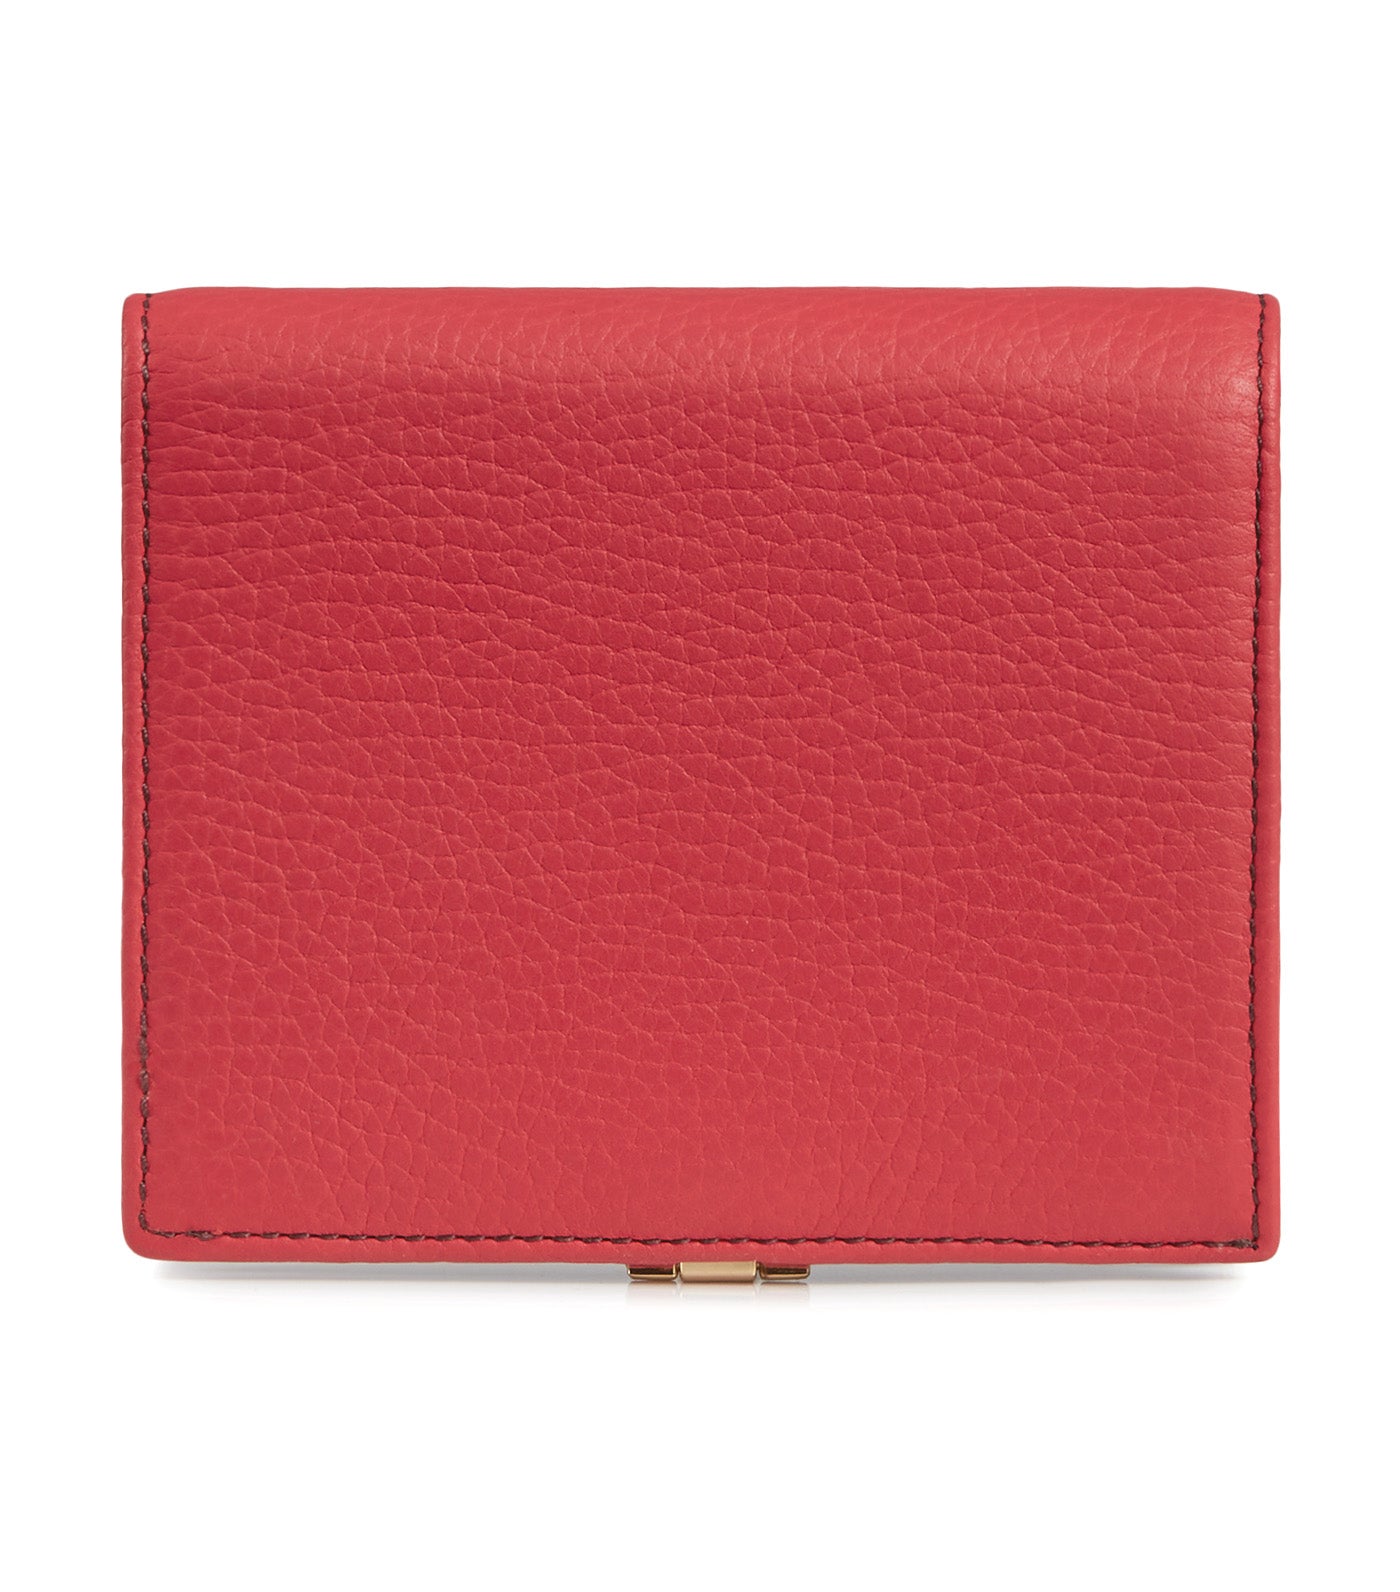 Crescent Wallet Raspberry Red with Burgundy Stitch